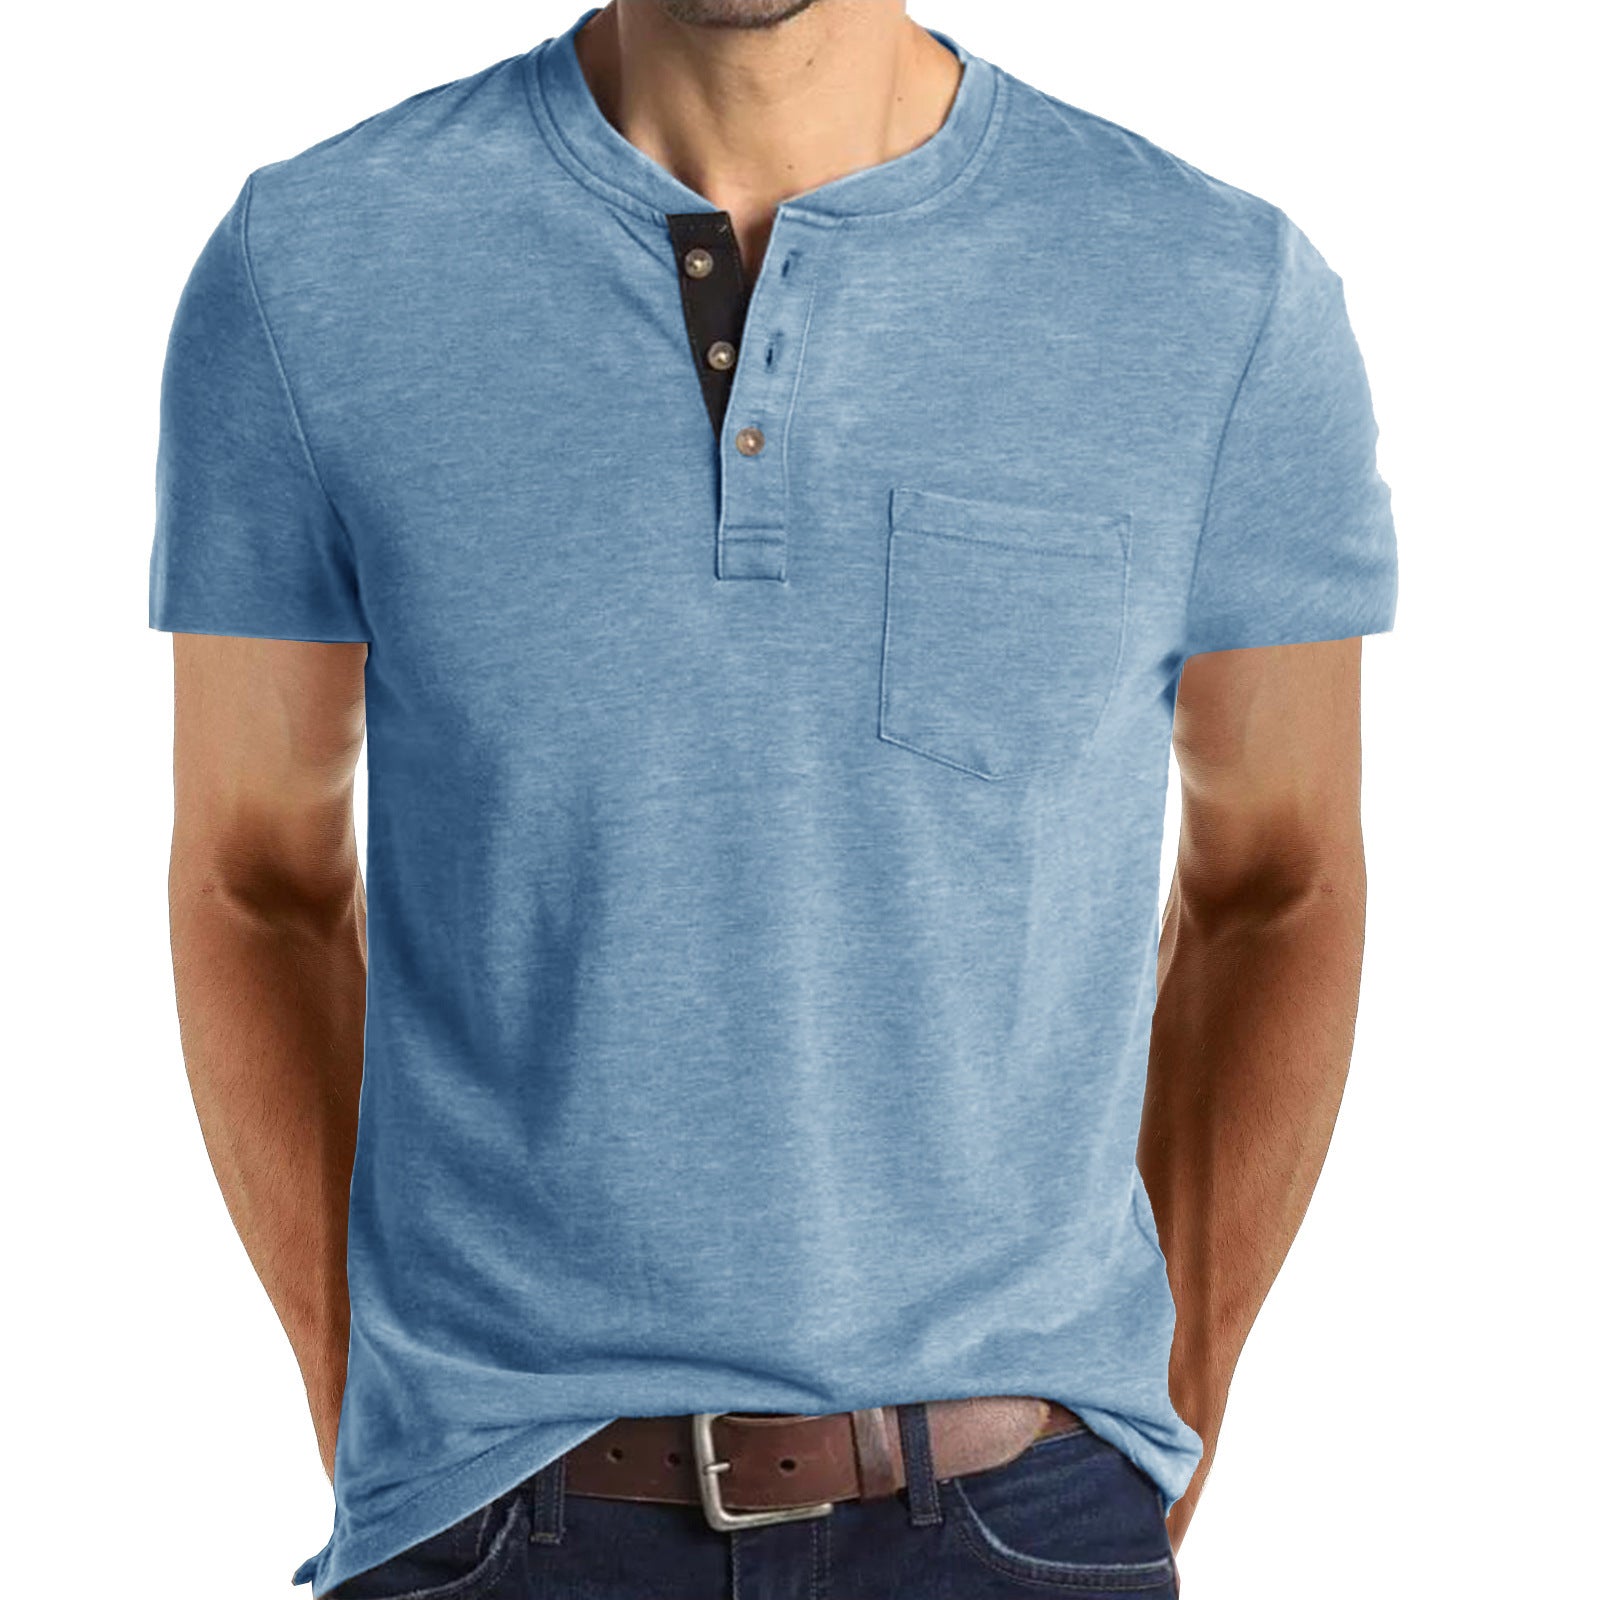 Casual Summer Short Sleeves Men T Shirts-Shirts-Light Blue-S-Free Shipping at meselling99